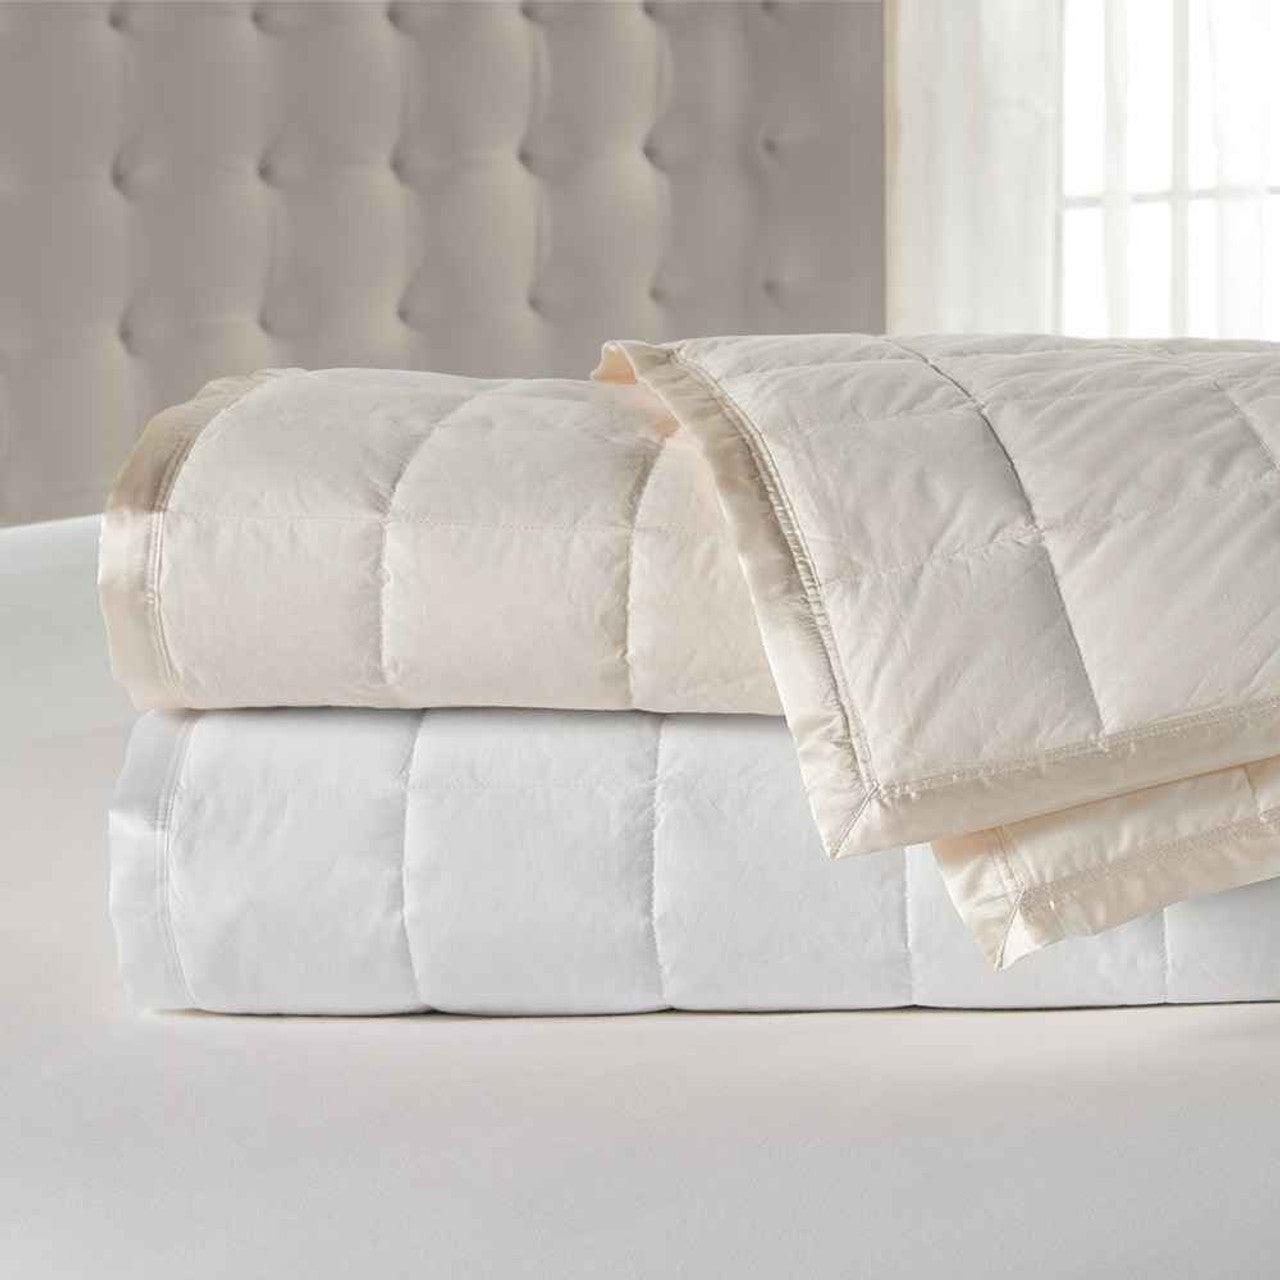 Lightweight Down Oversized Blanket (Hypoallergenic) - beddingbag.com